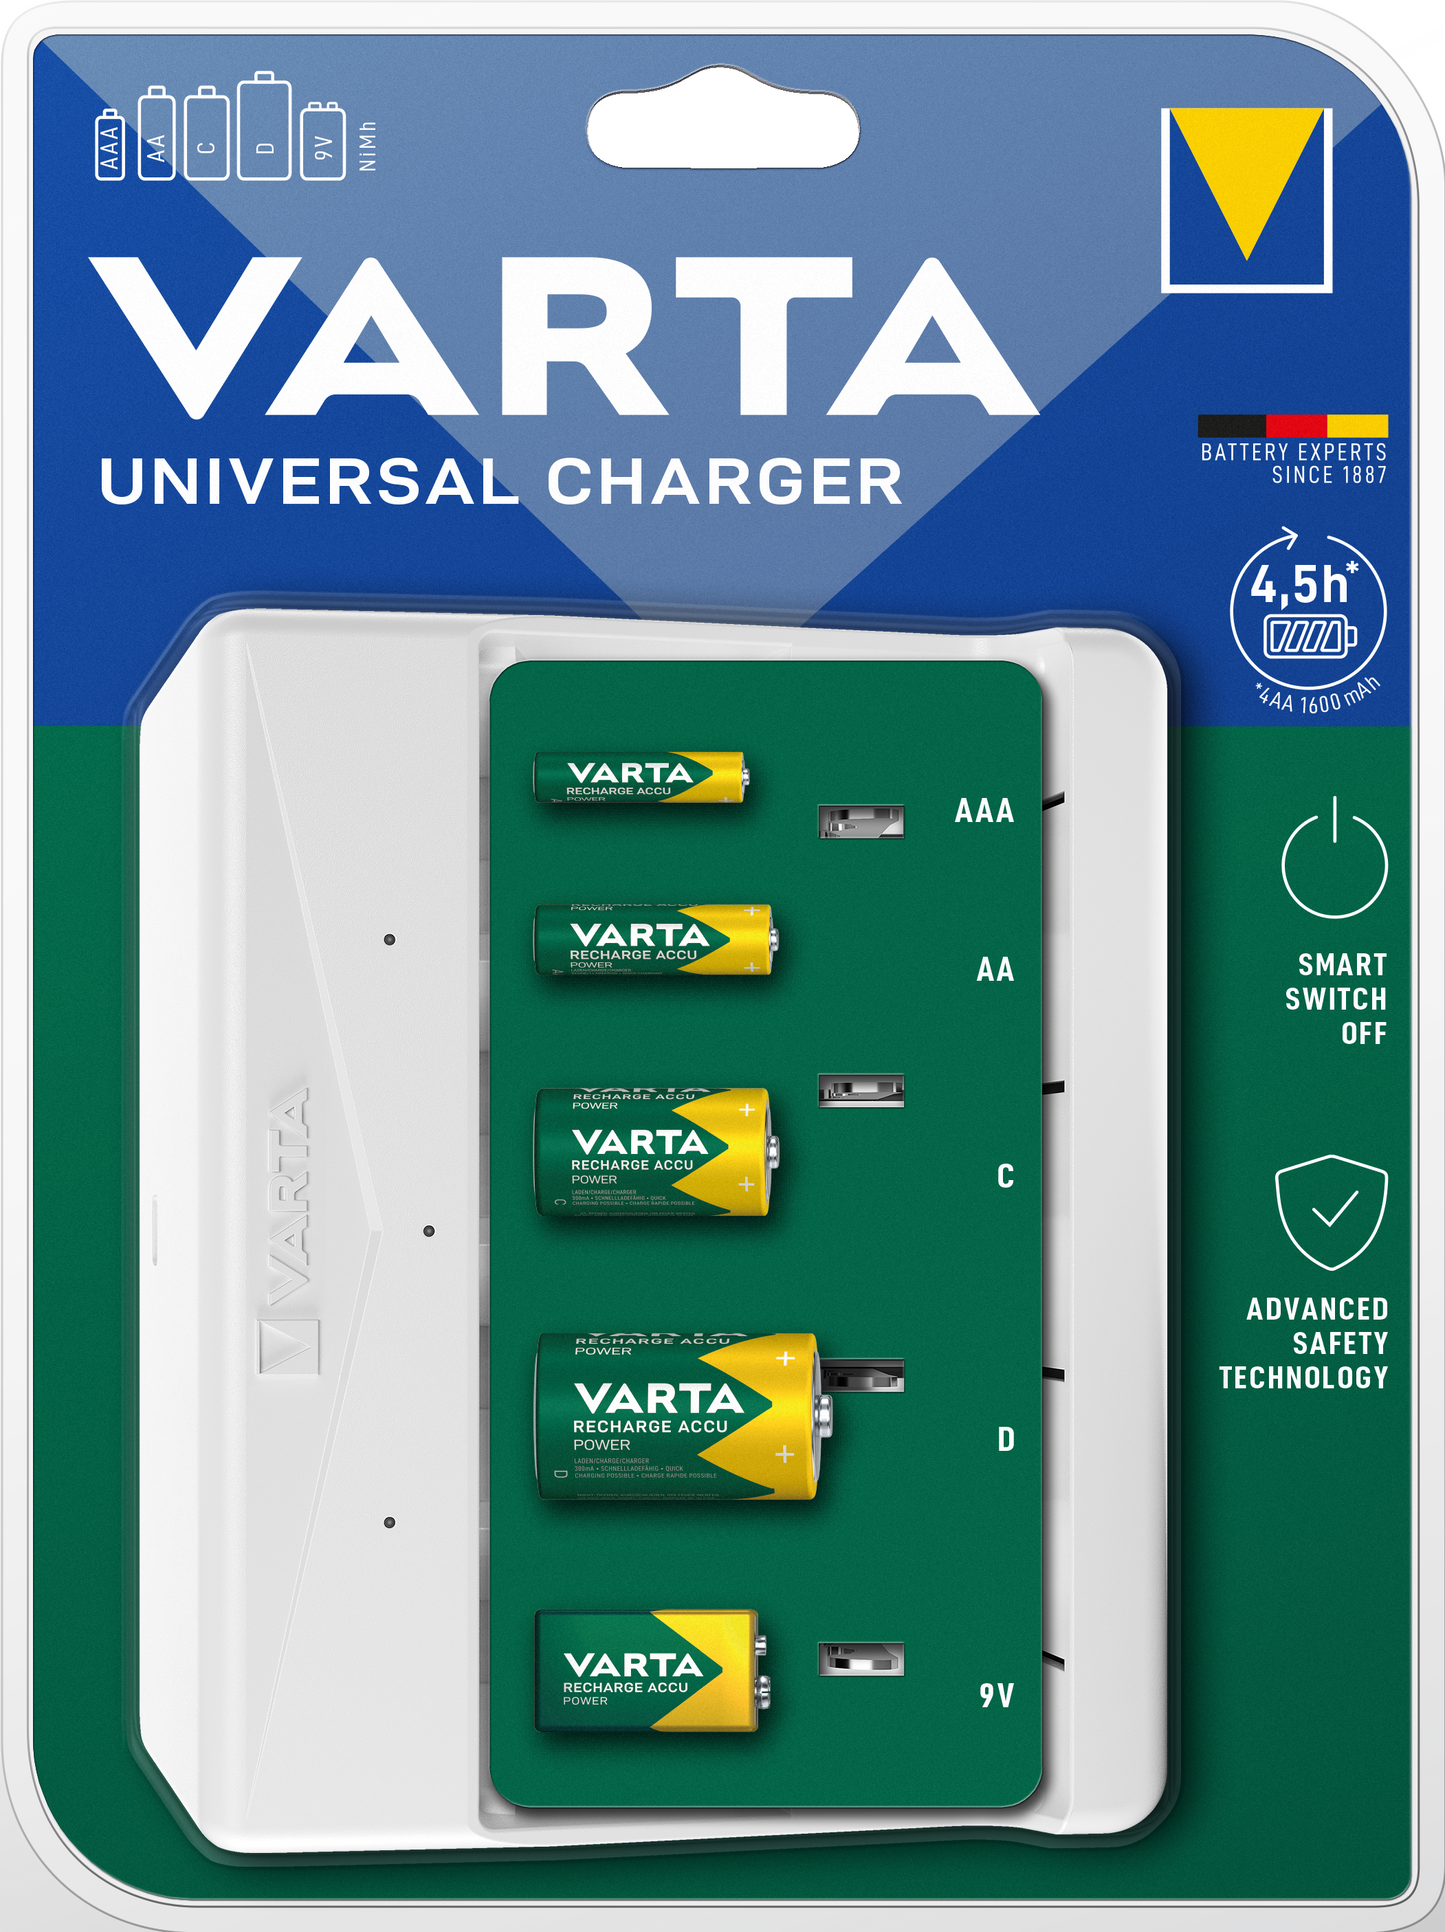 VARTA - Universal Charger